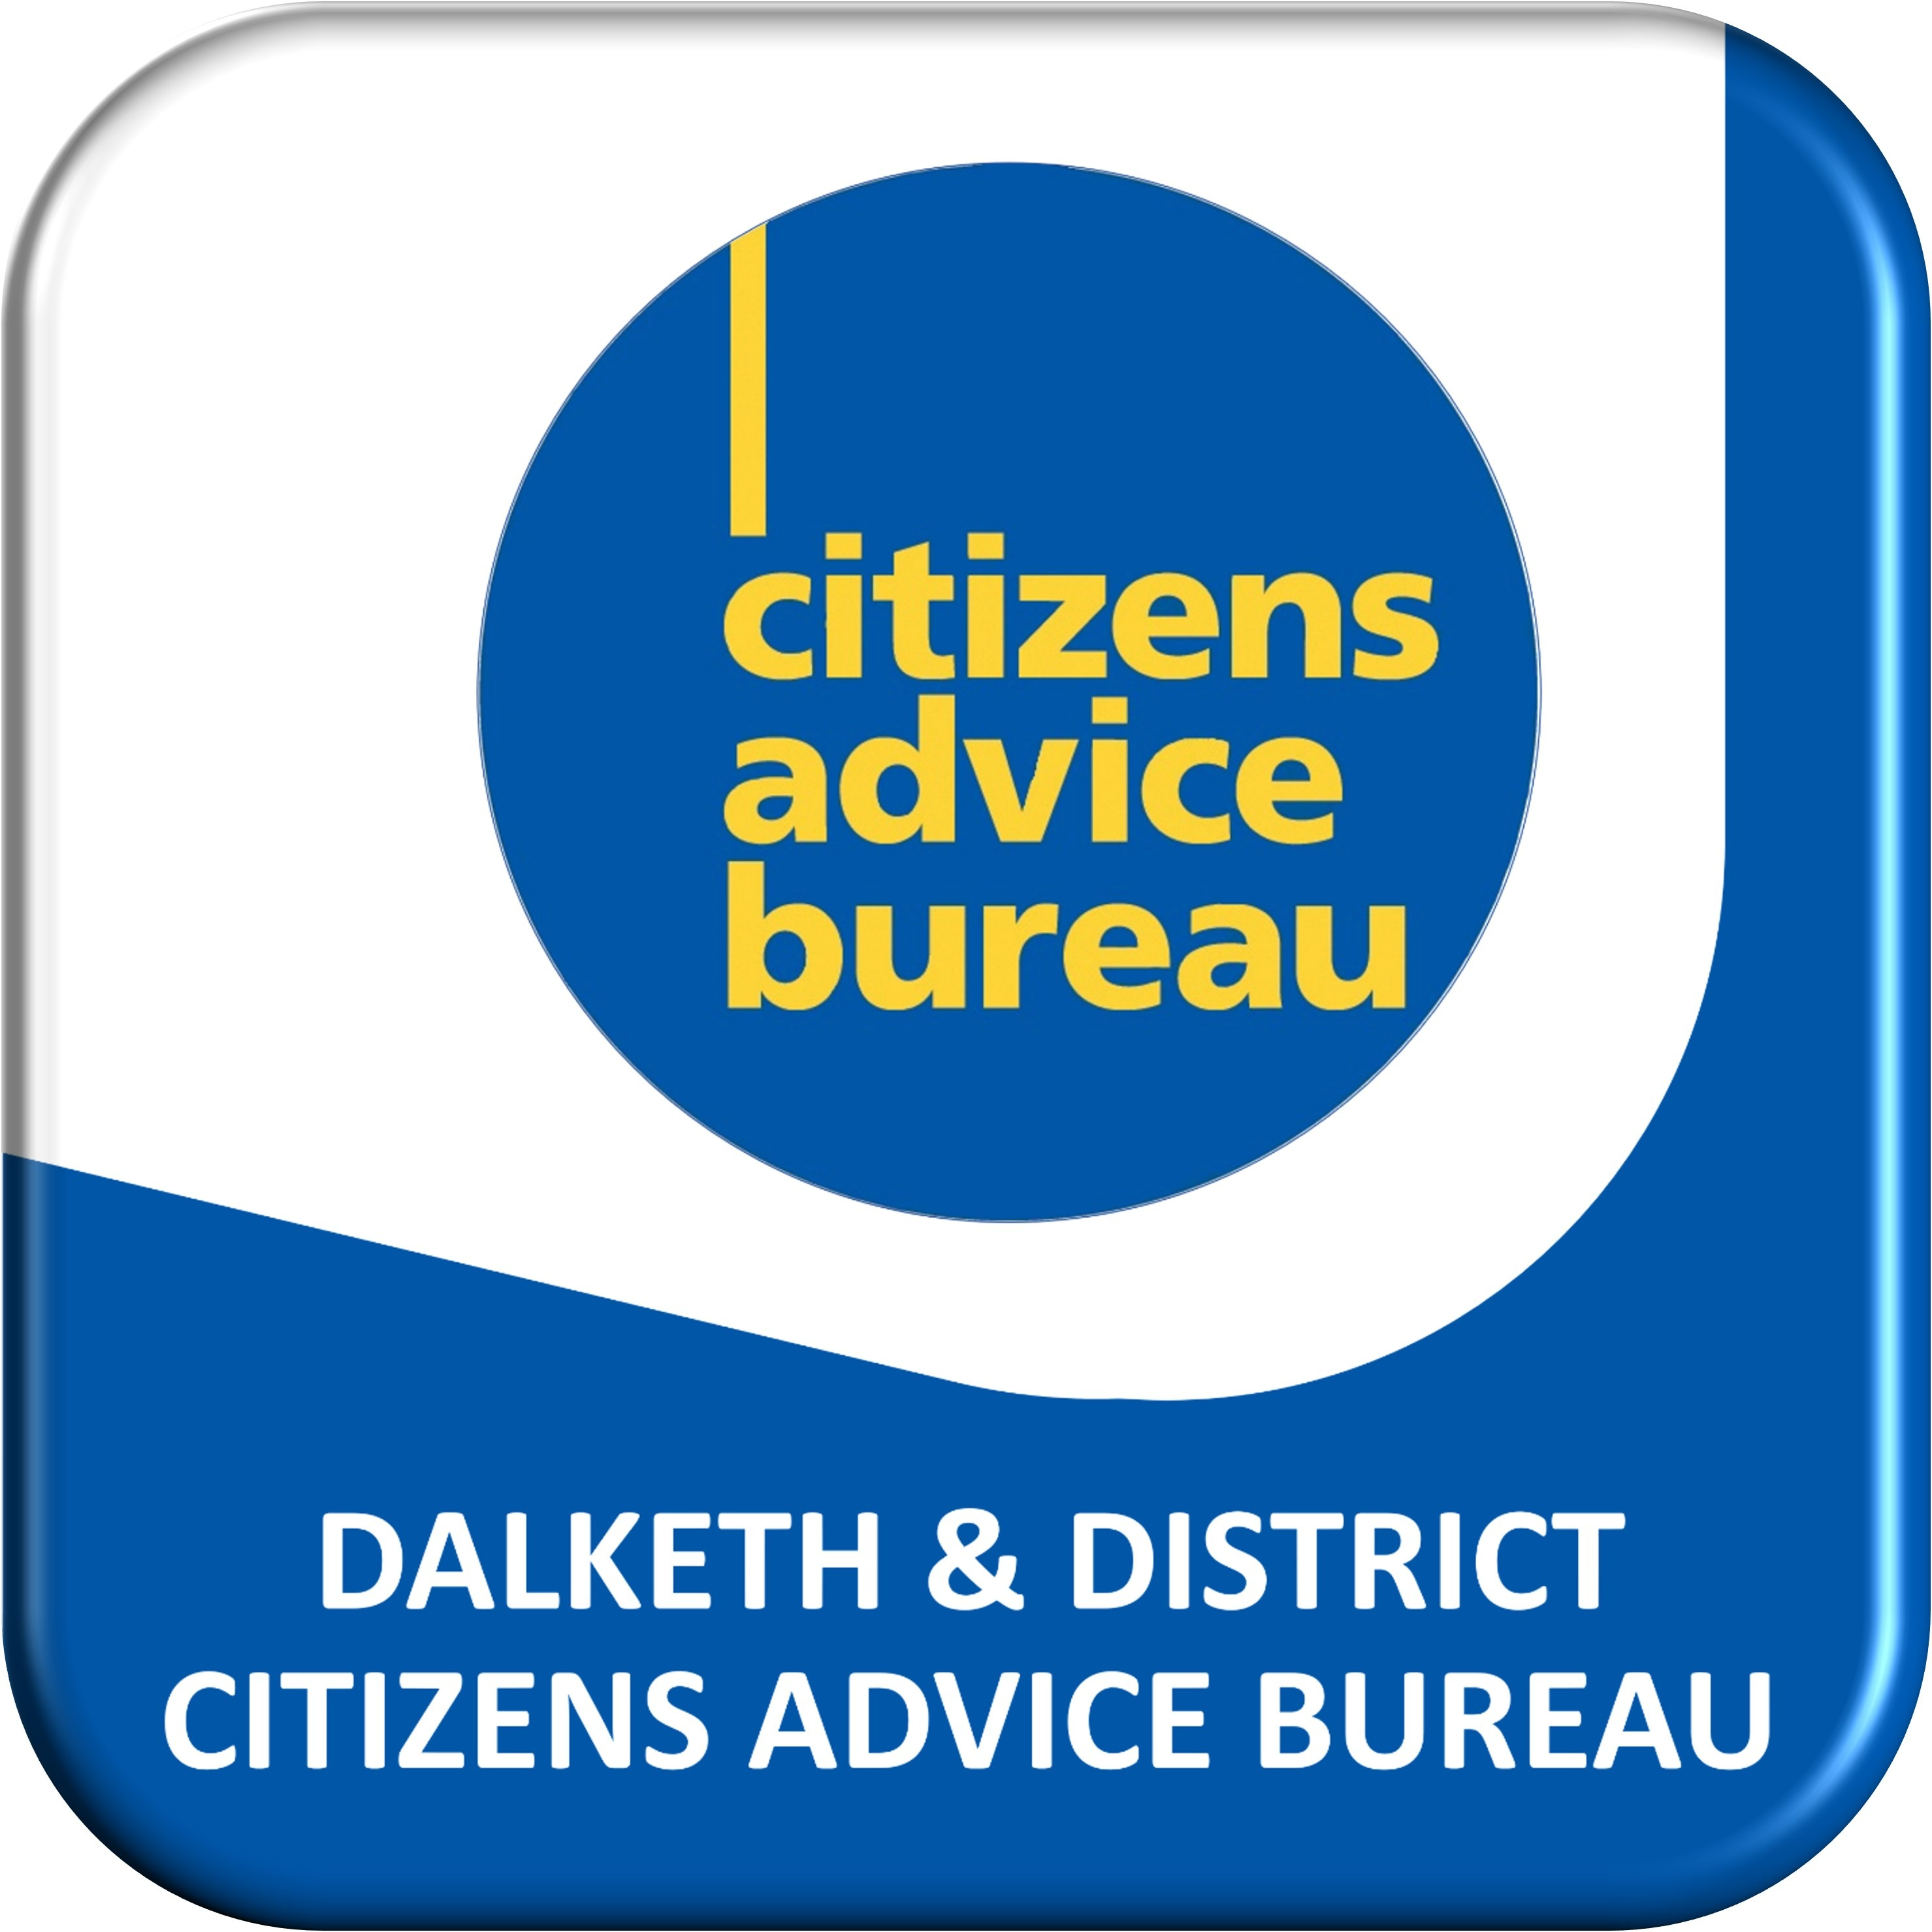 Dalkeith & District Citizens Advice Bureau (Dalkeith CAB) logo